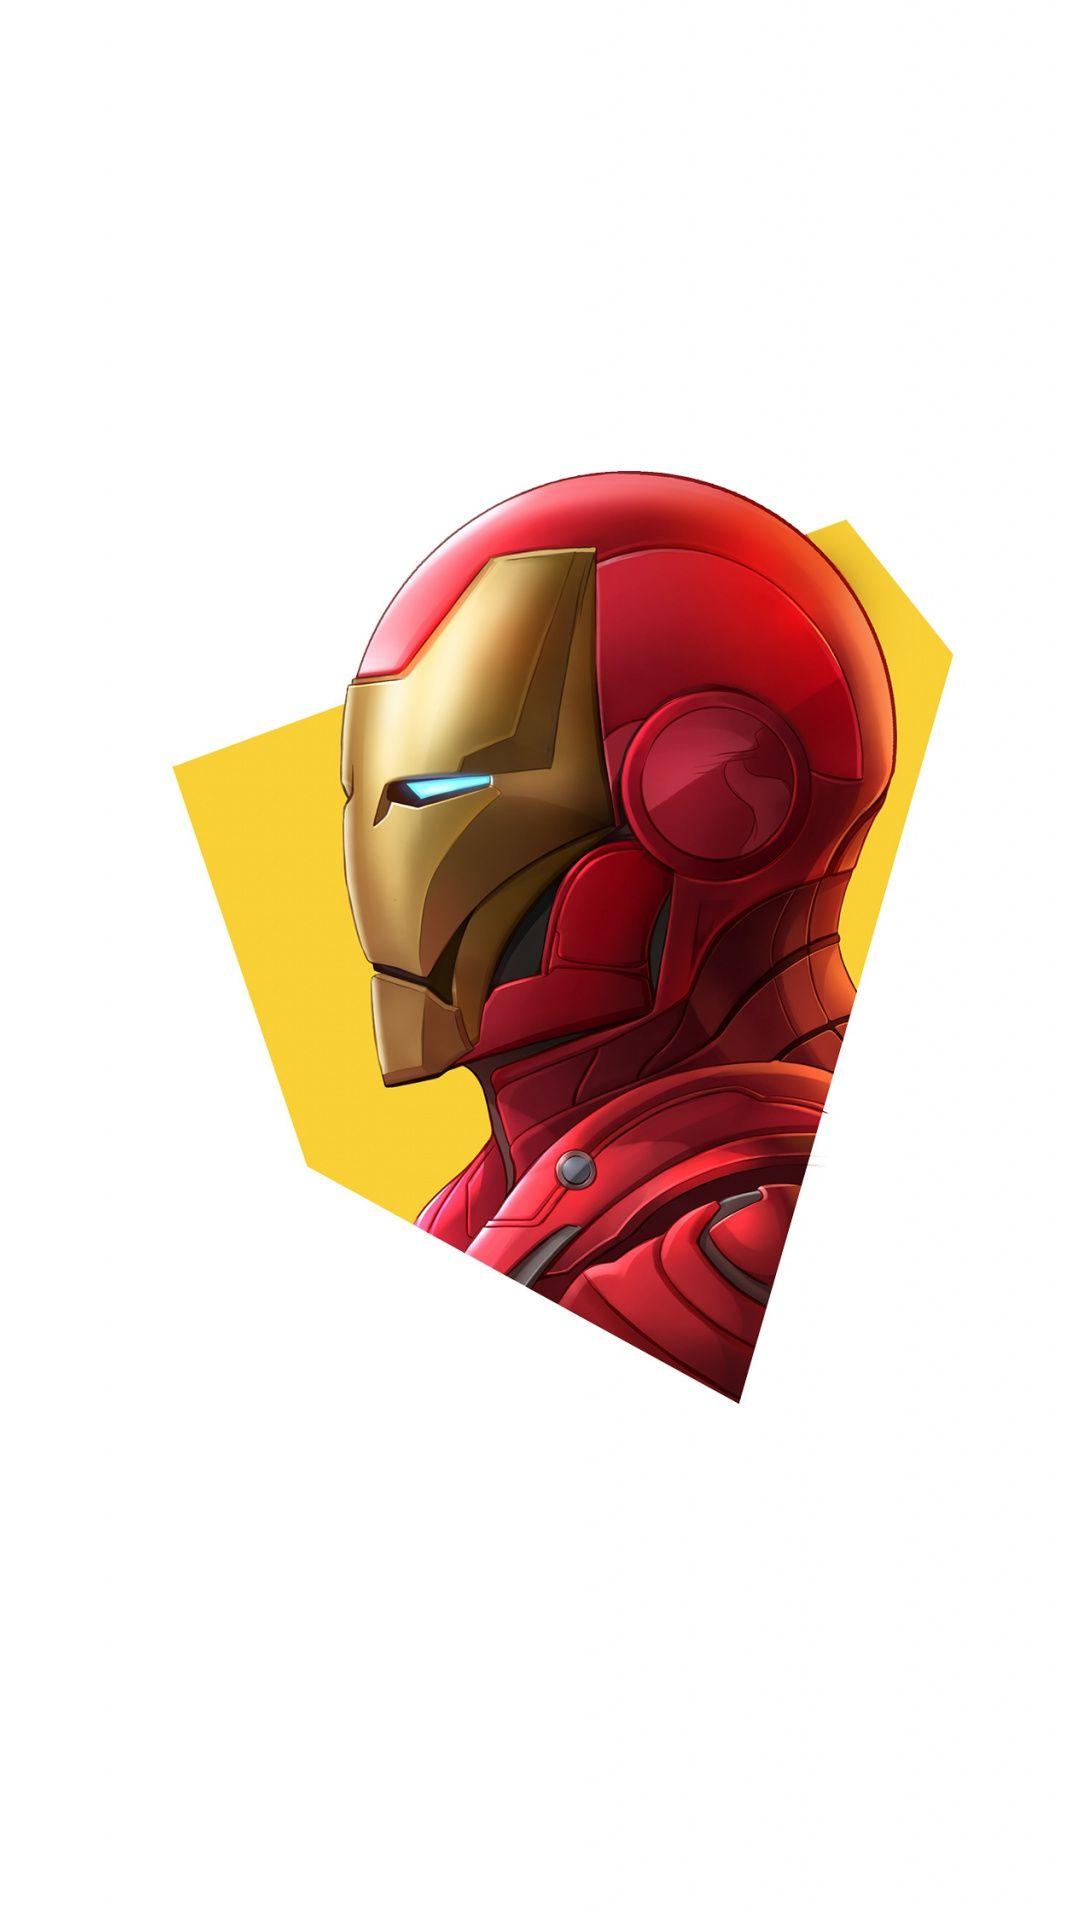 Iron man, simple and minimal, art wallpaper. superheroes & villains